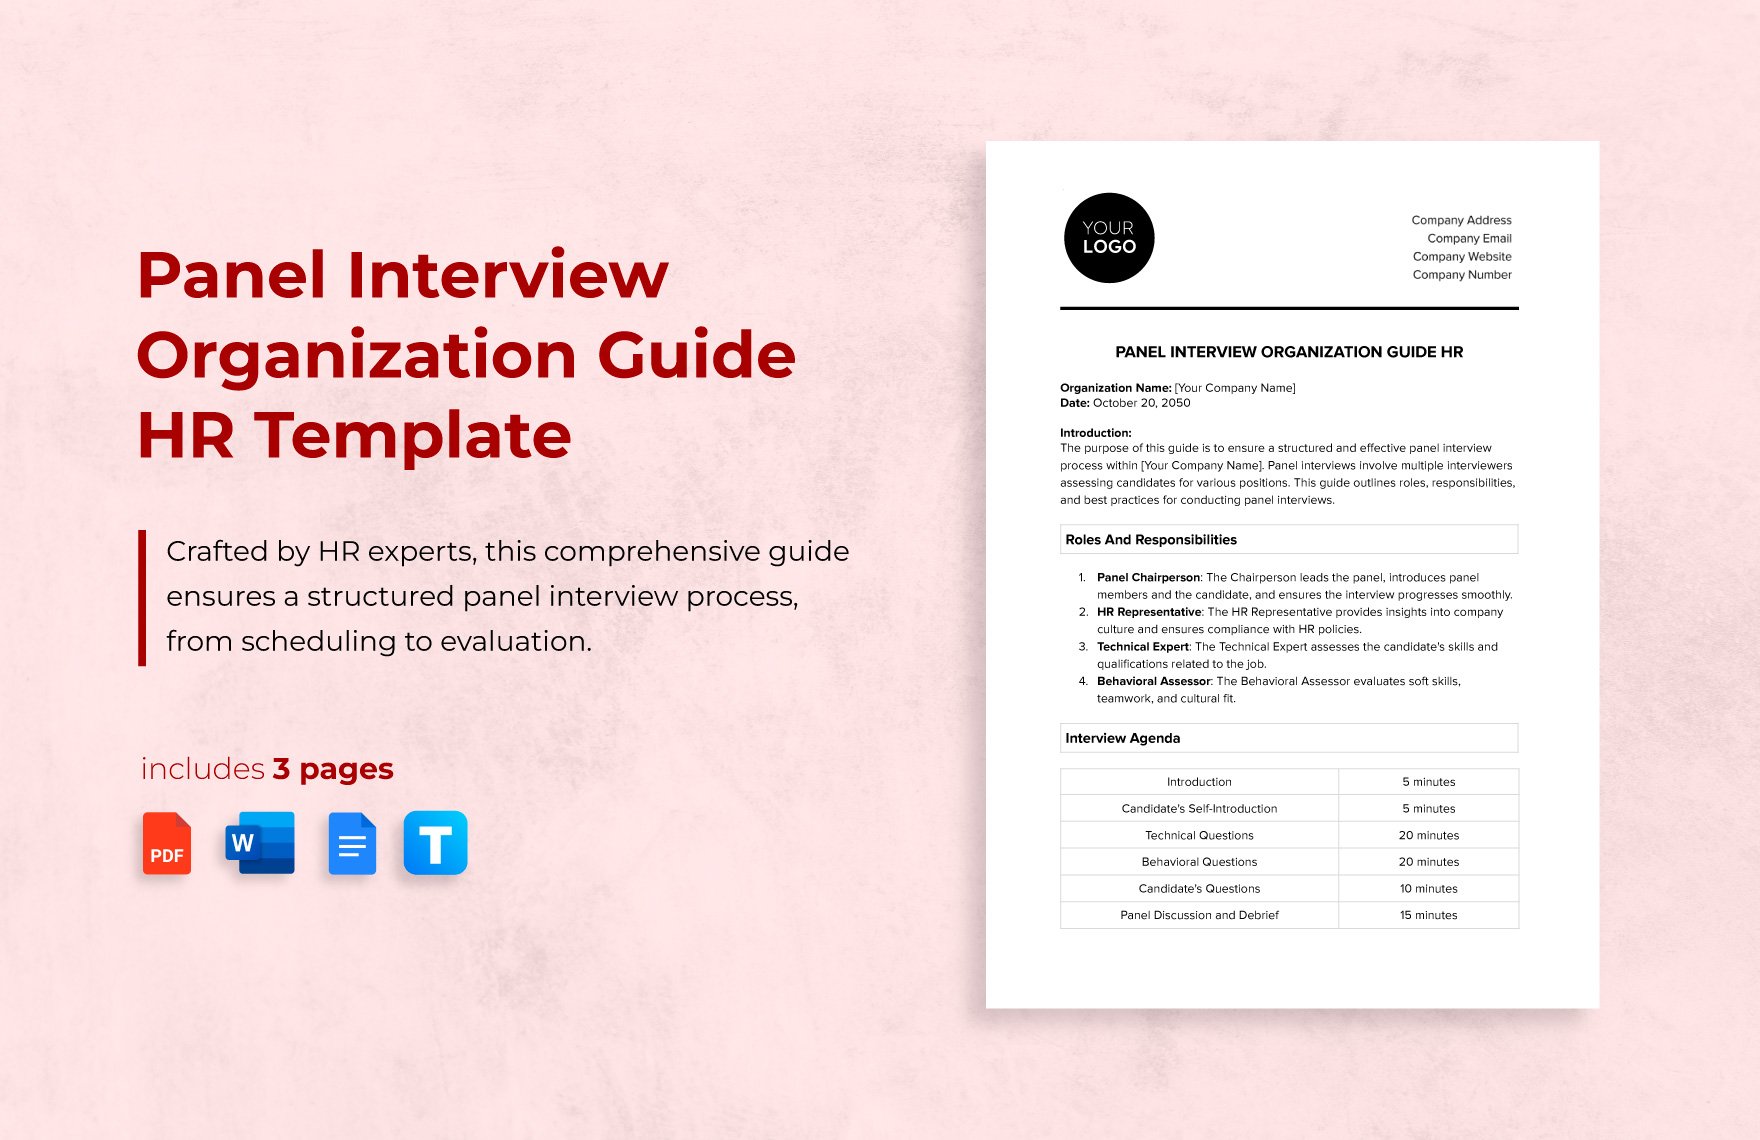 Panel Interview Organization Guide HR Template